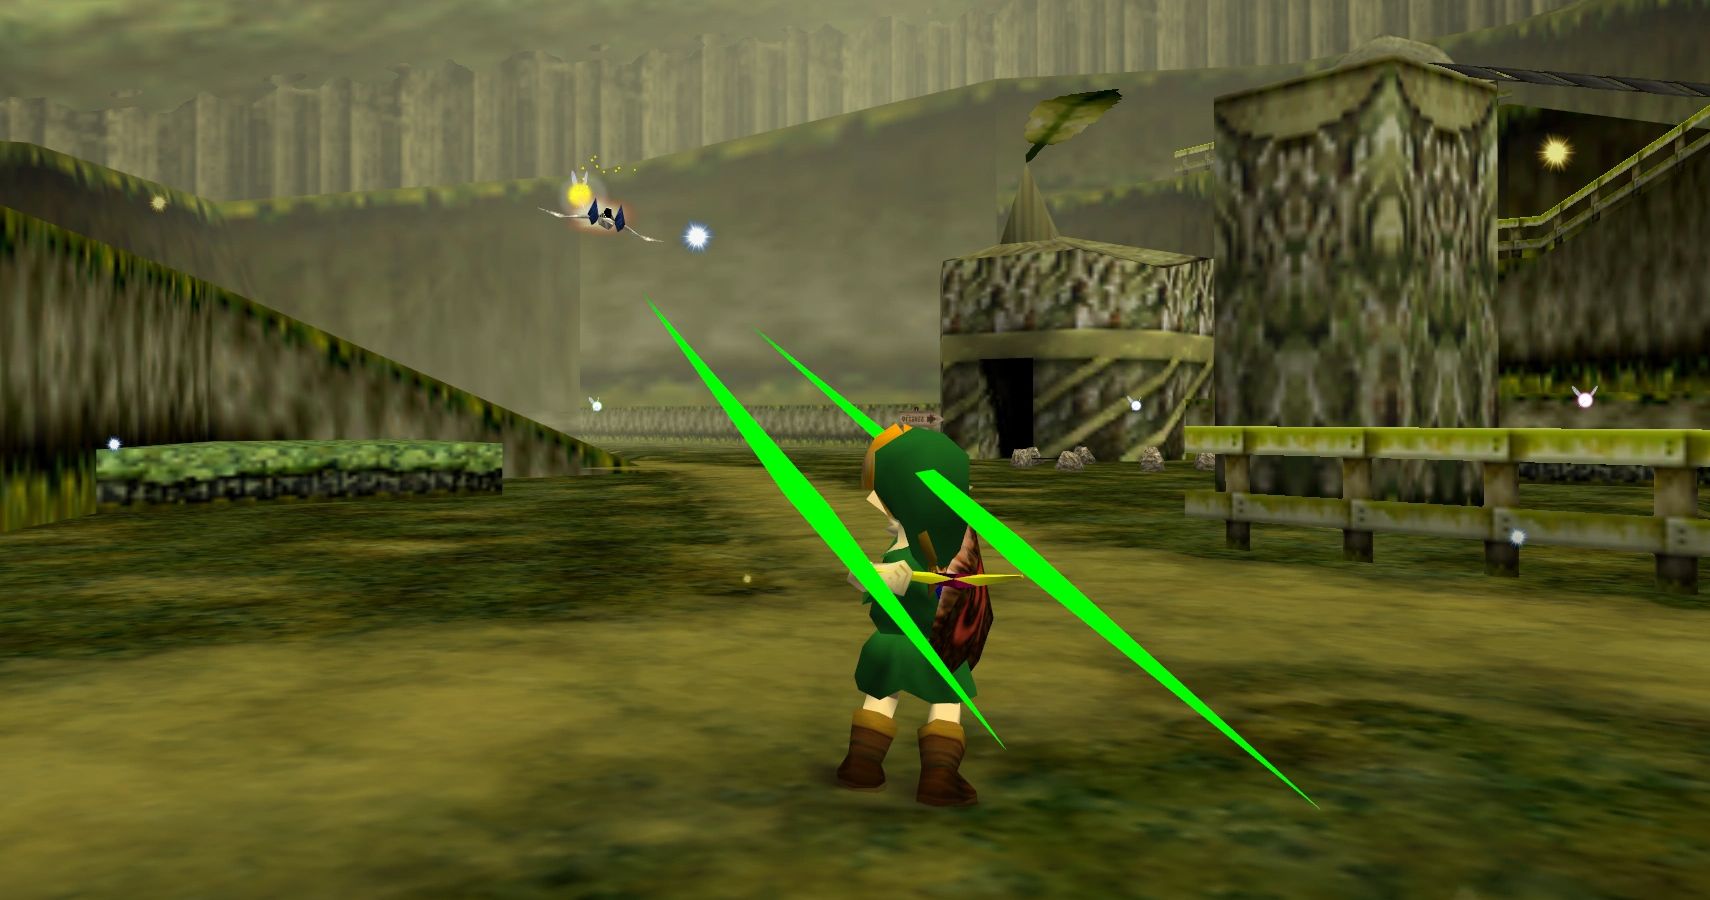 The Legend of Zelda: The Wind Waker - The Cutting Room Floor